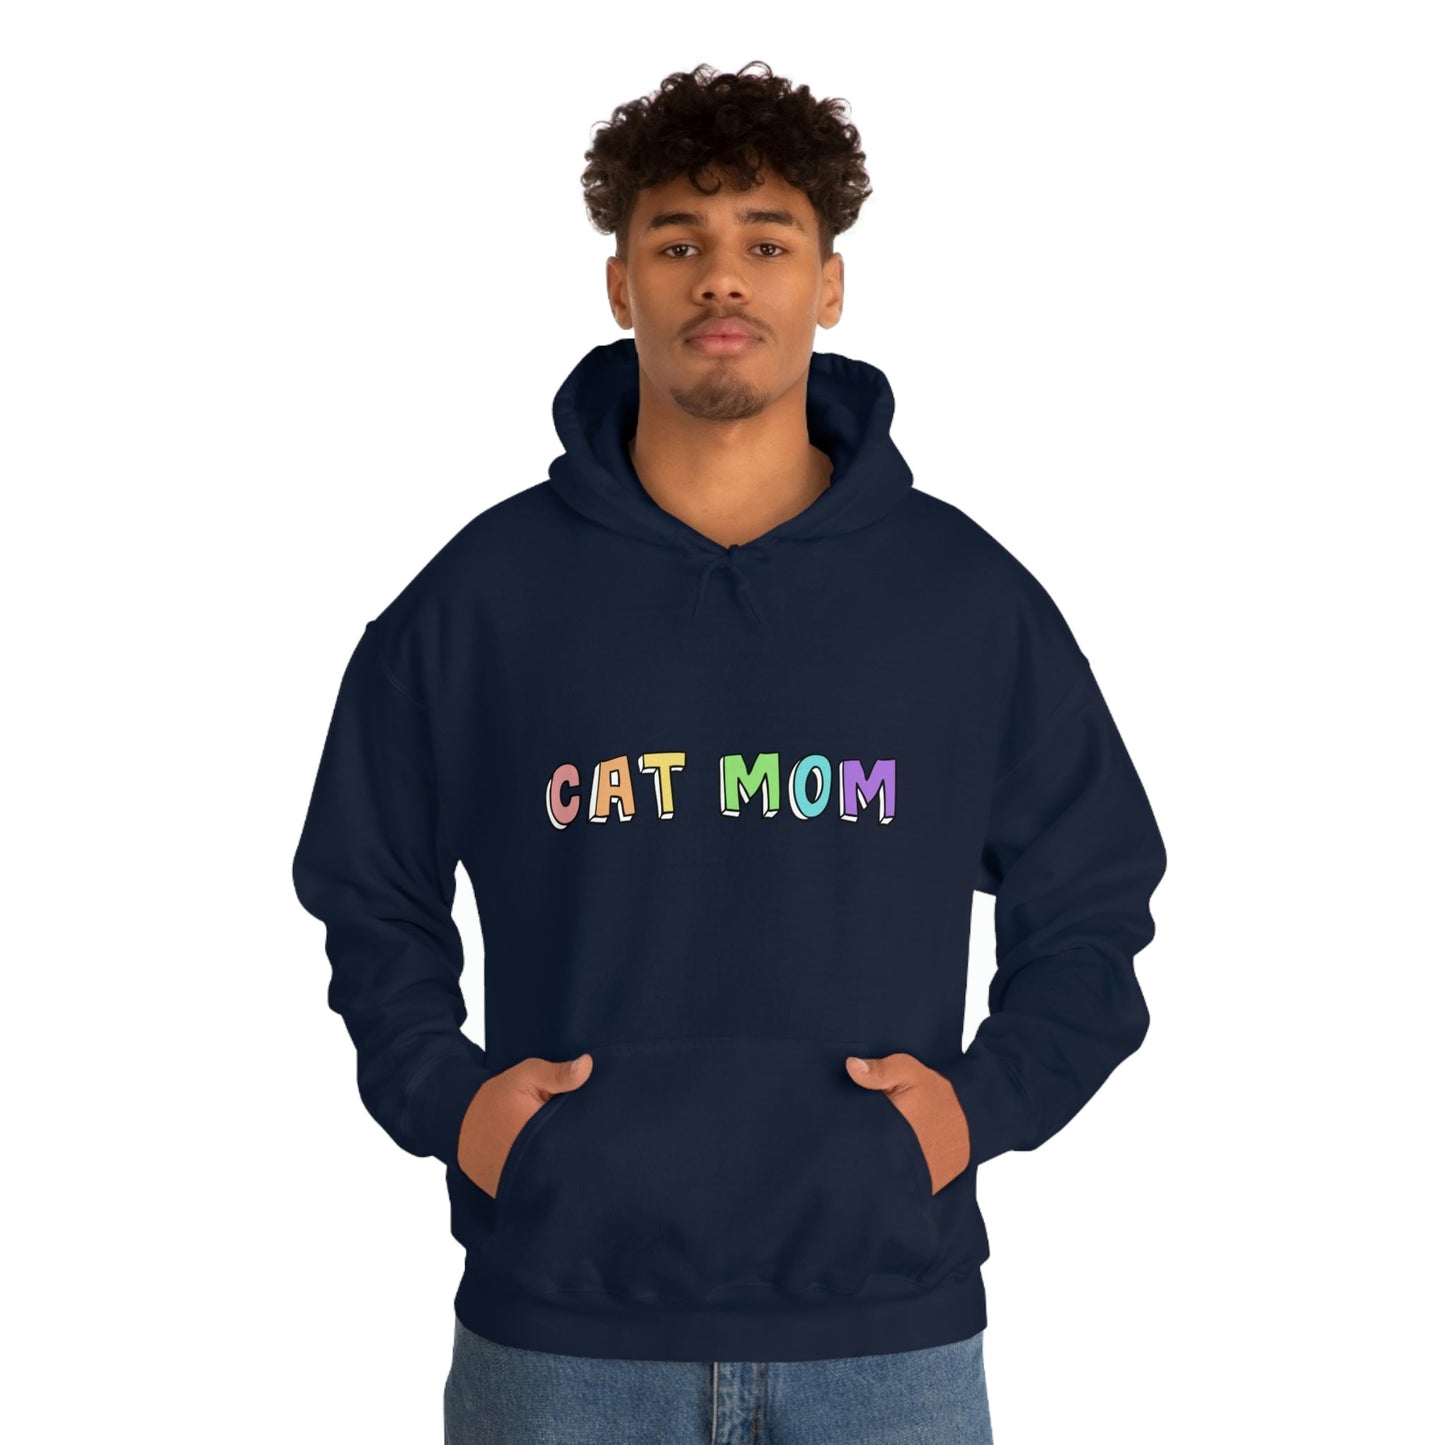 Cat Mom | Hooded Sweatshirt - Detezi Designs-22335185994440414657